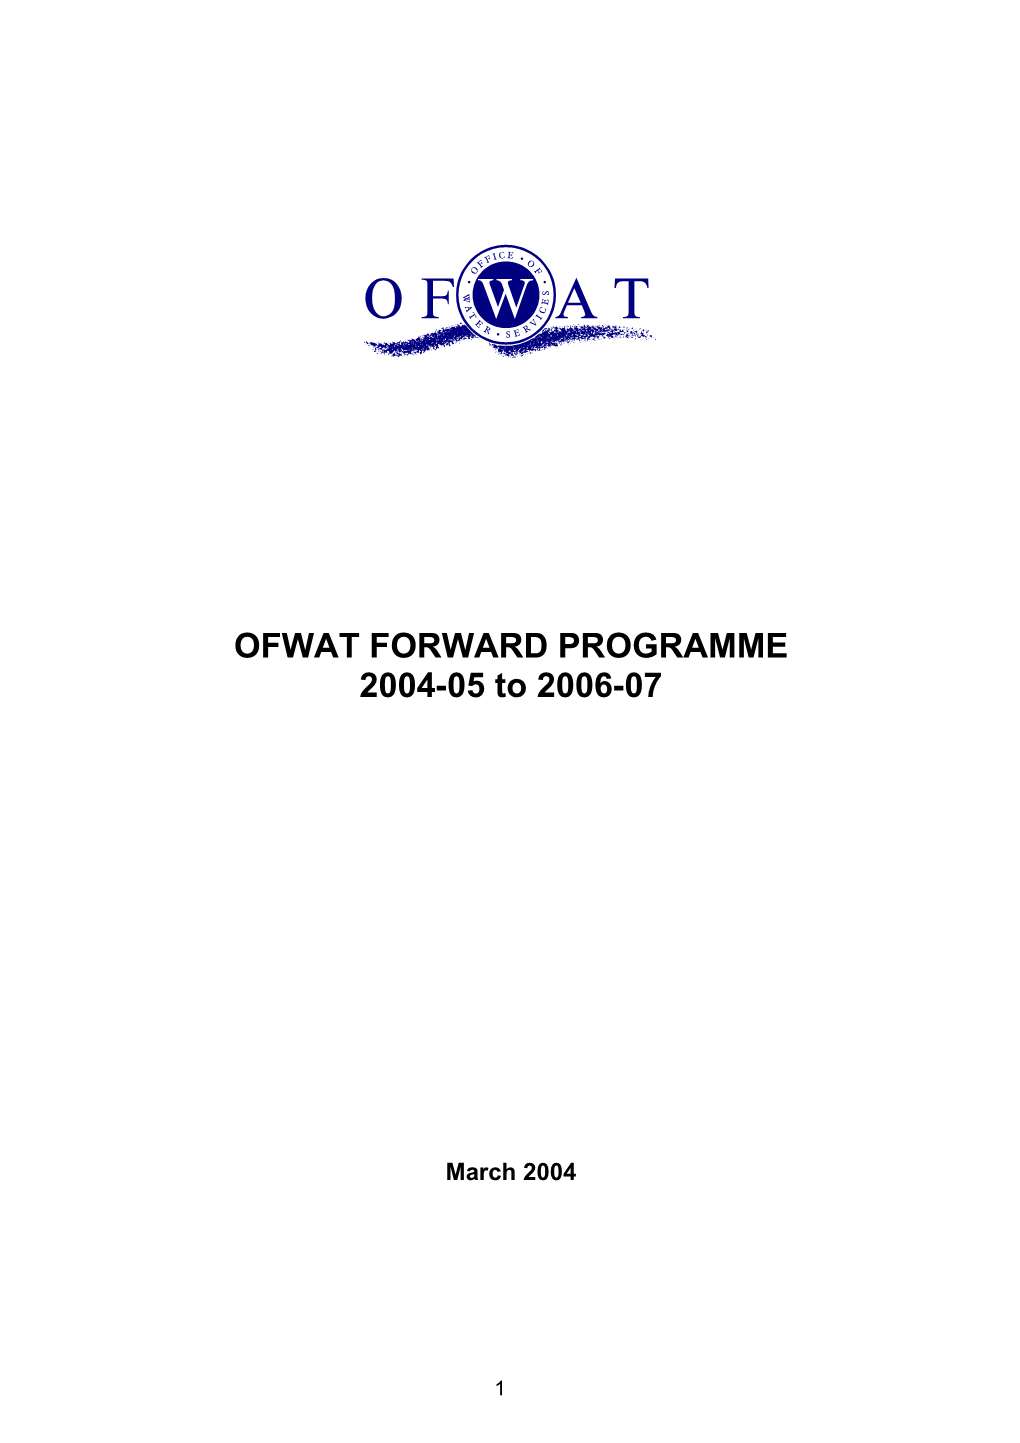 OFWAT Forward Programme: 2004-05 to 2006-07